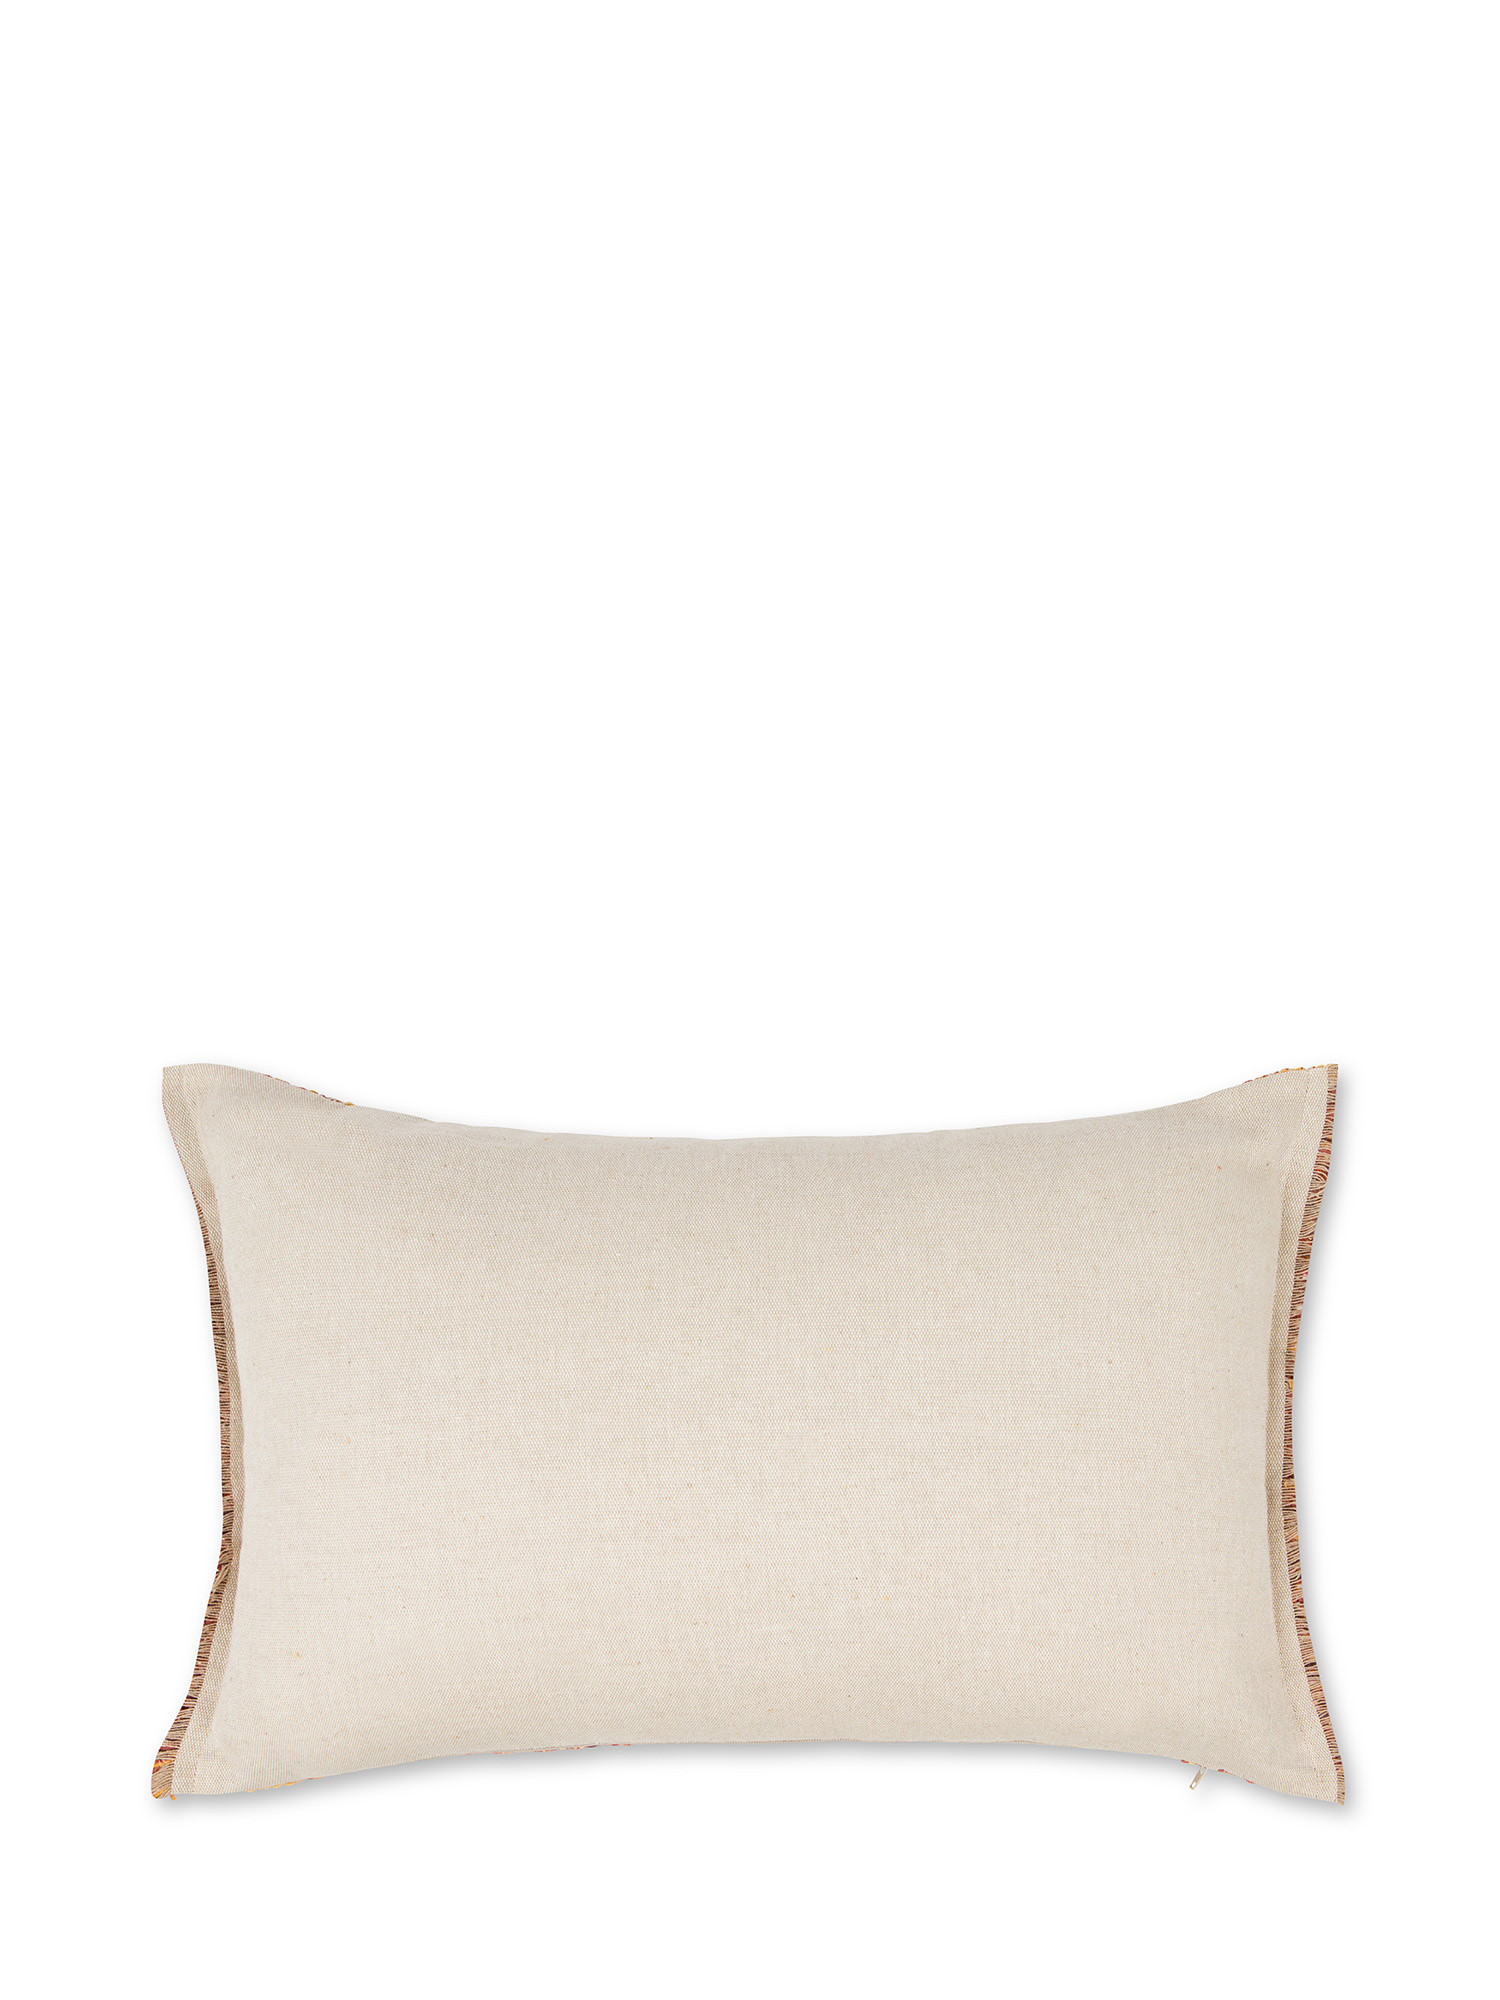 Cuscino maglia jacquard con frange 35X55cm, Arancione, large image number 1